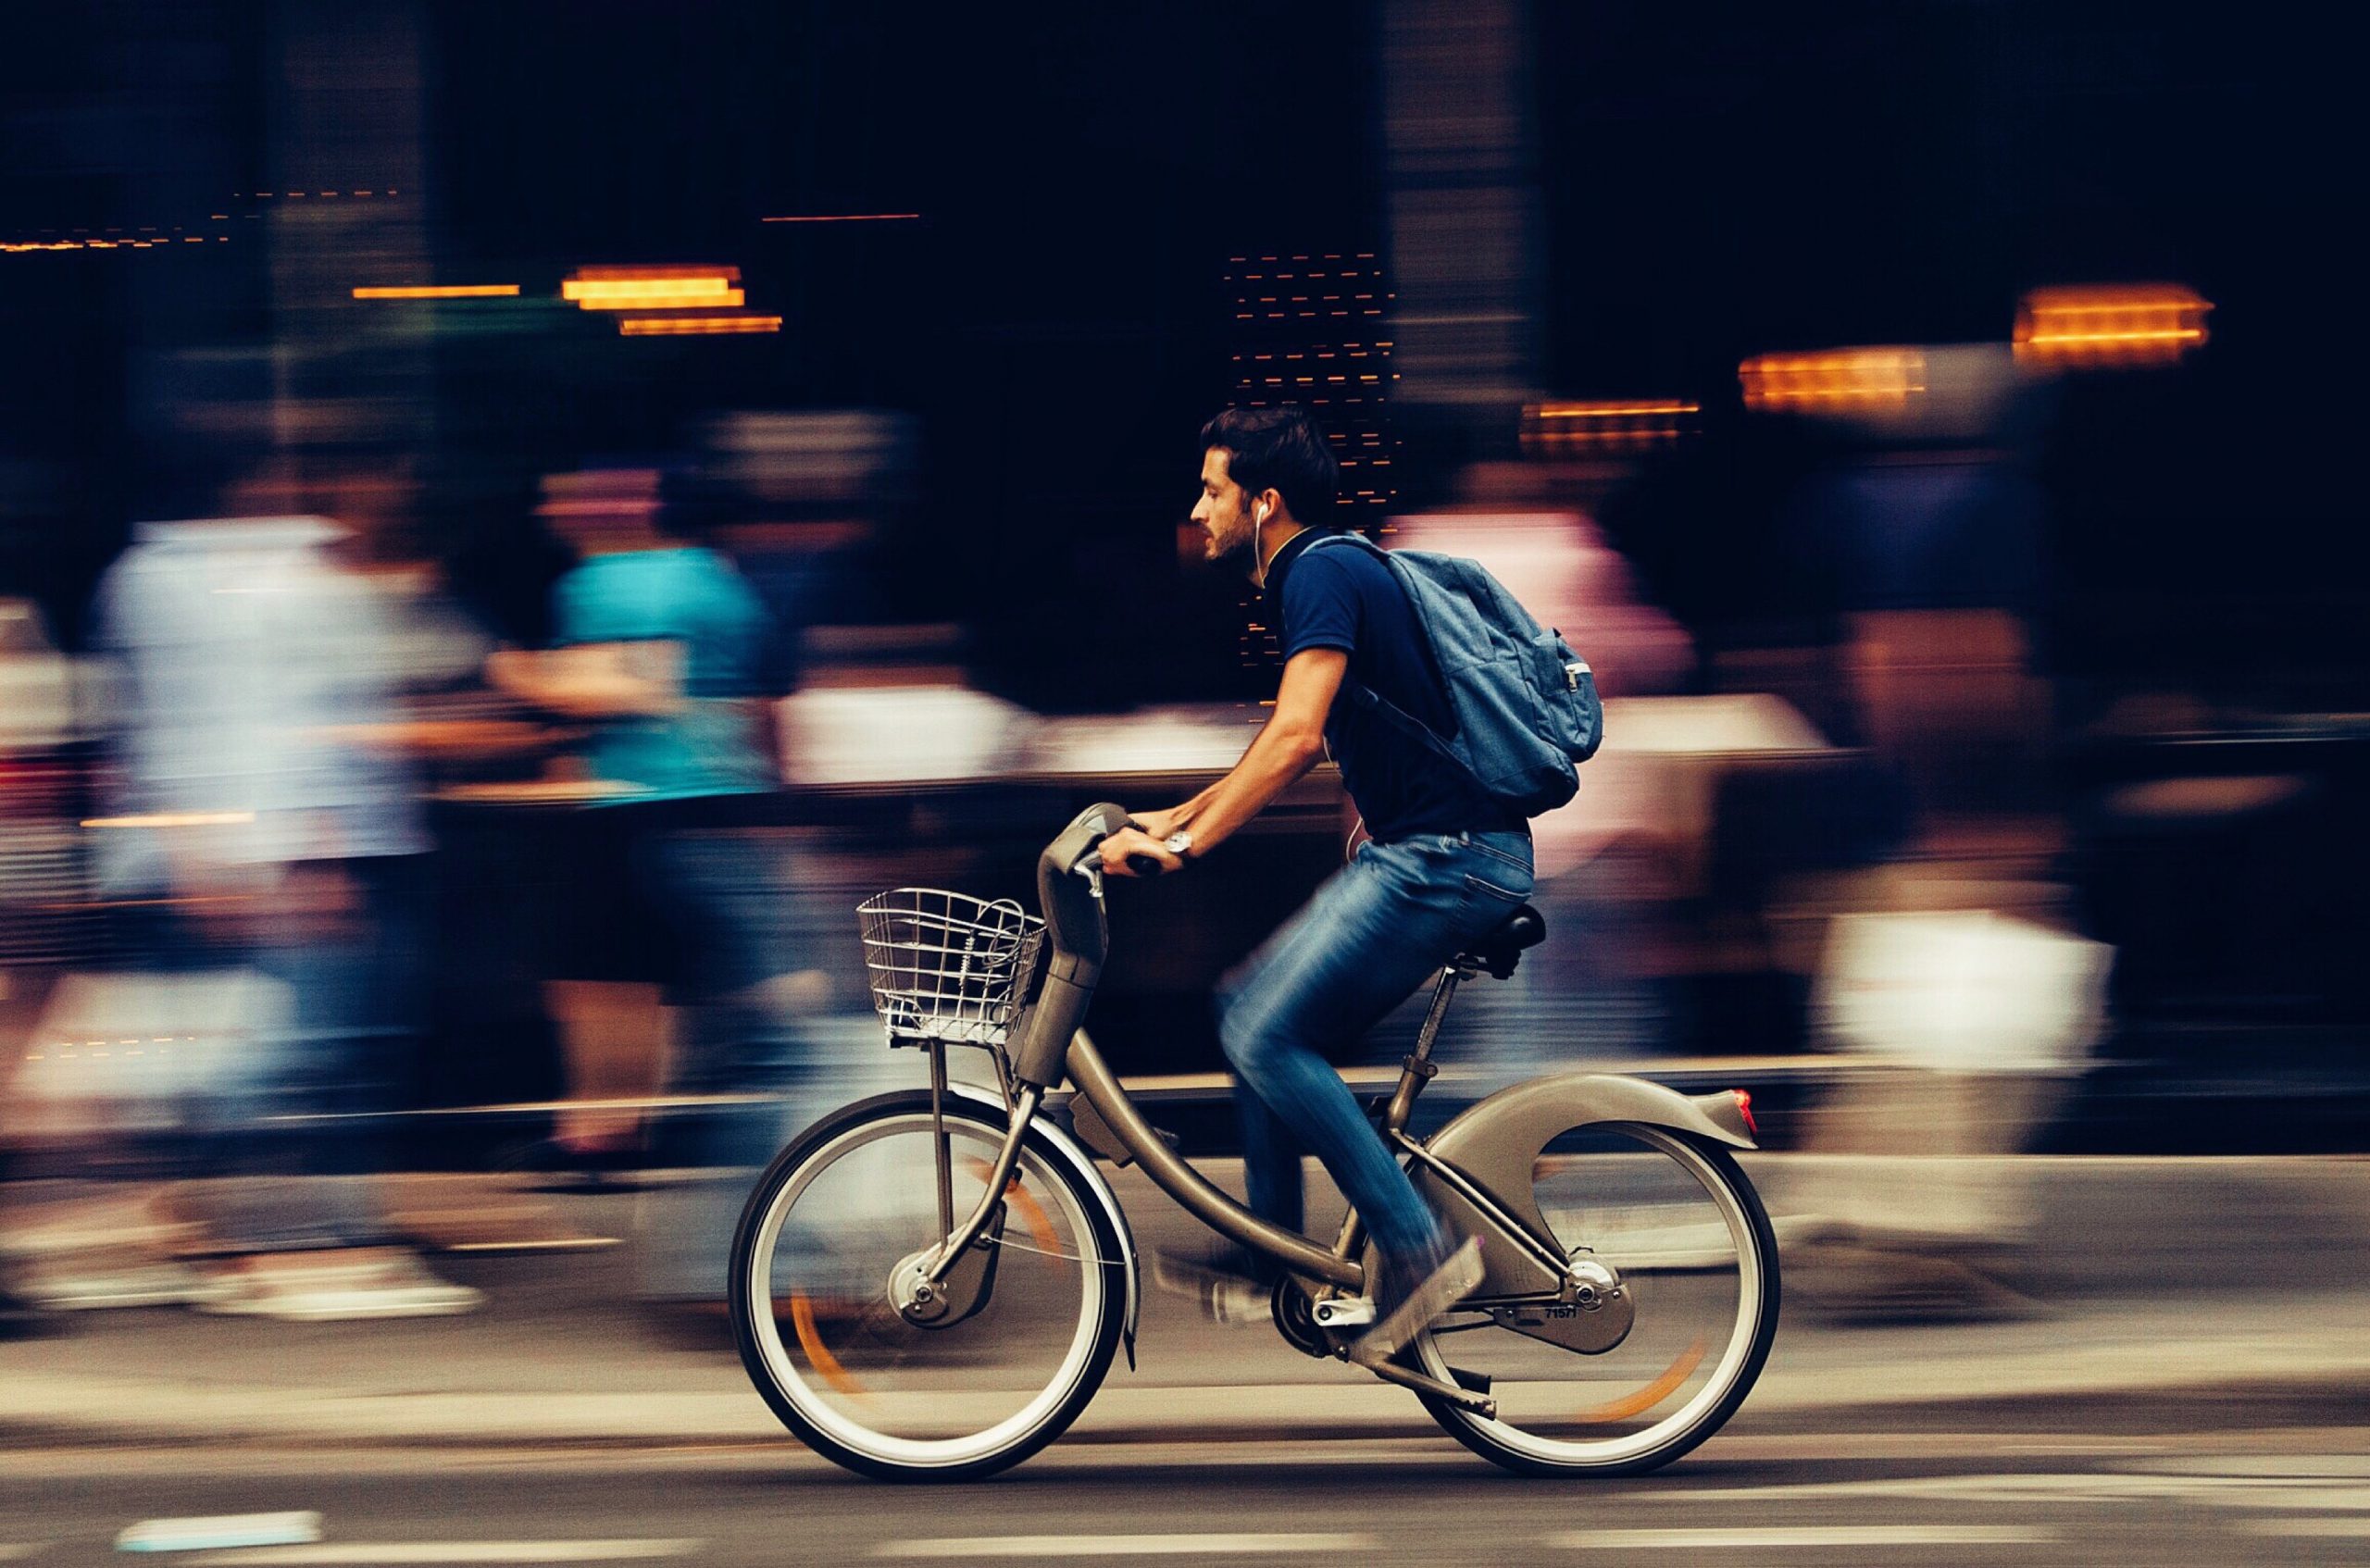 man-riding-bicycle-on-city-street-310983